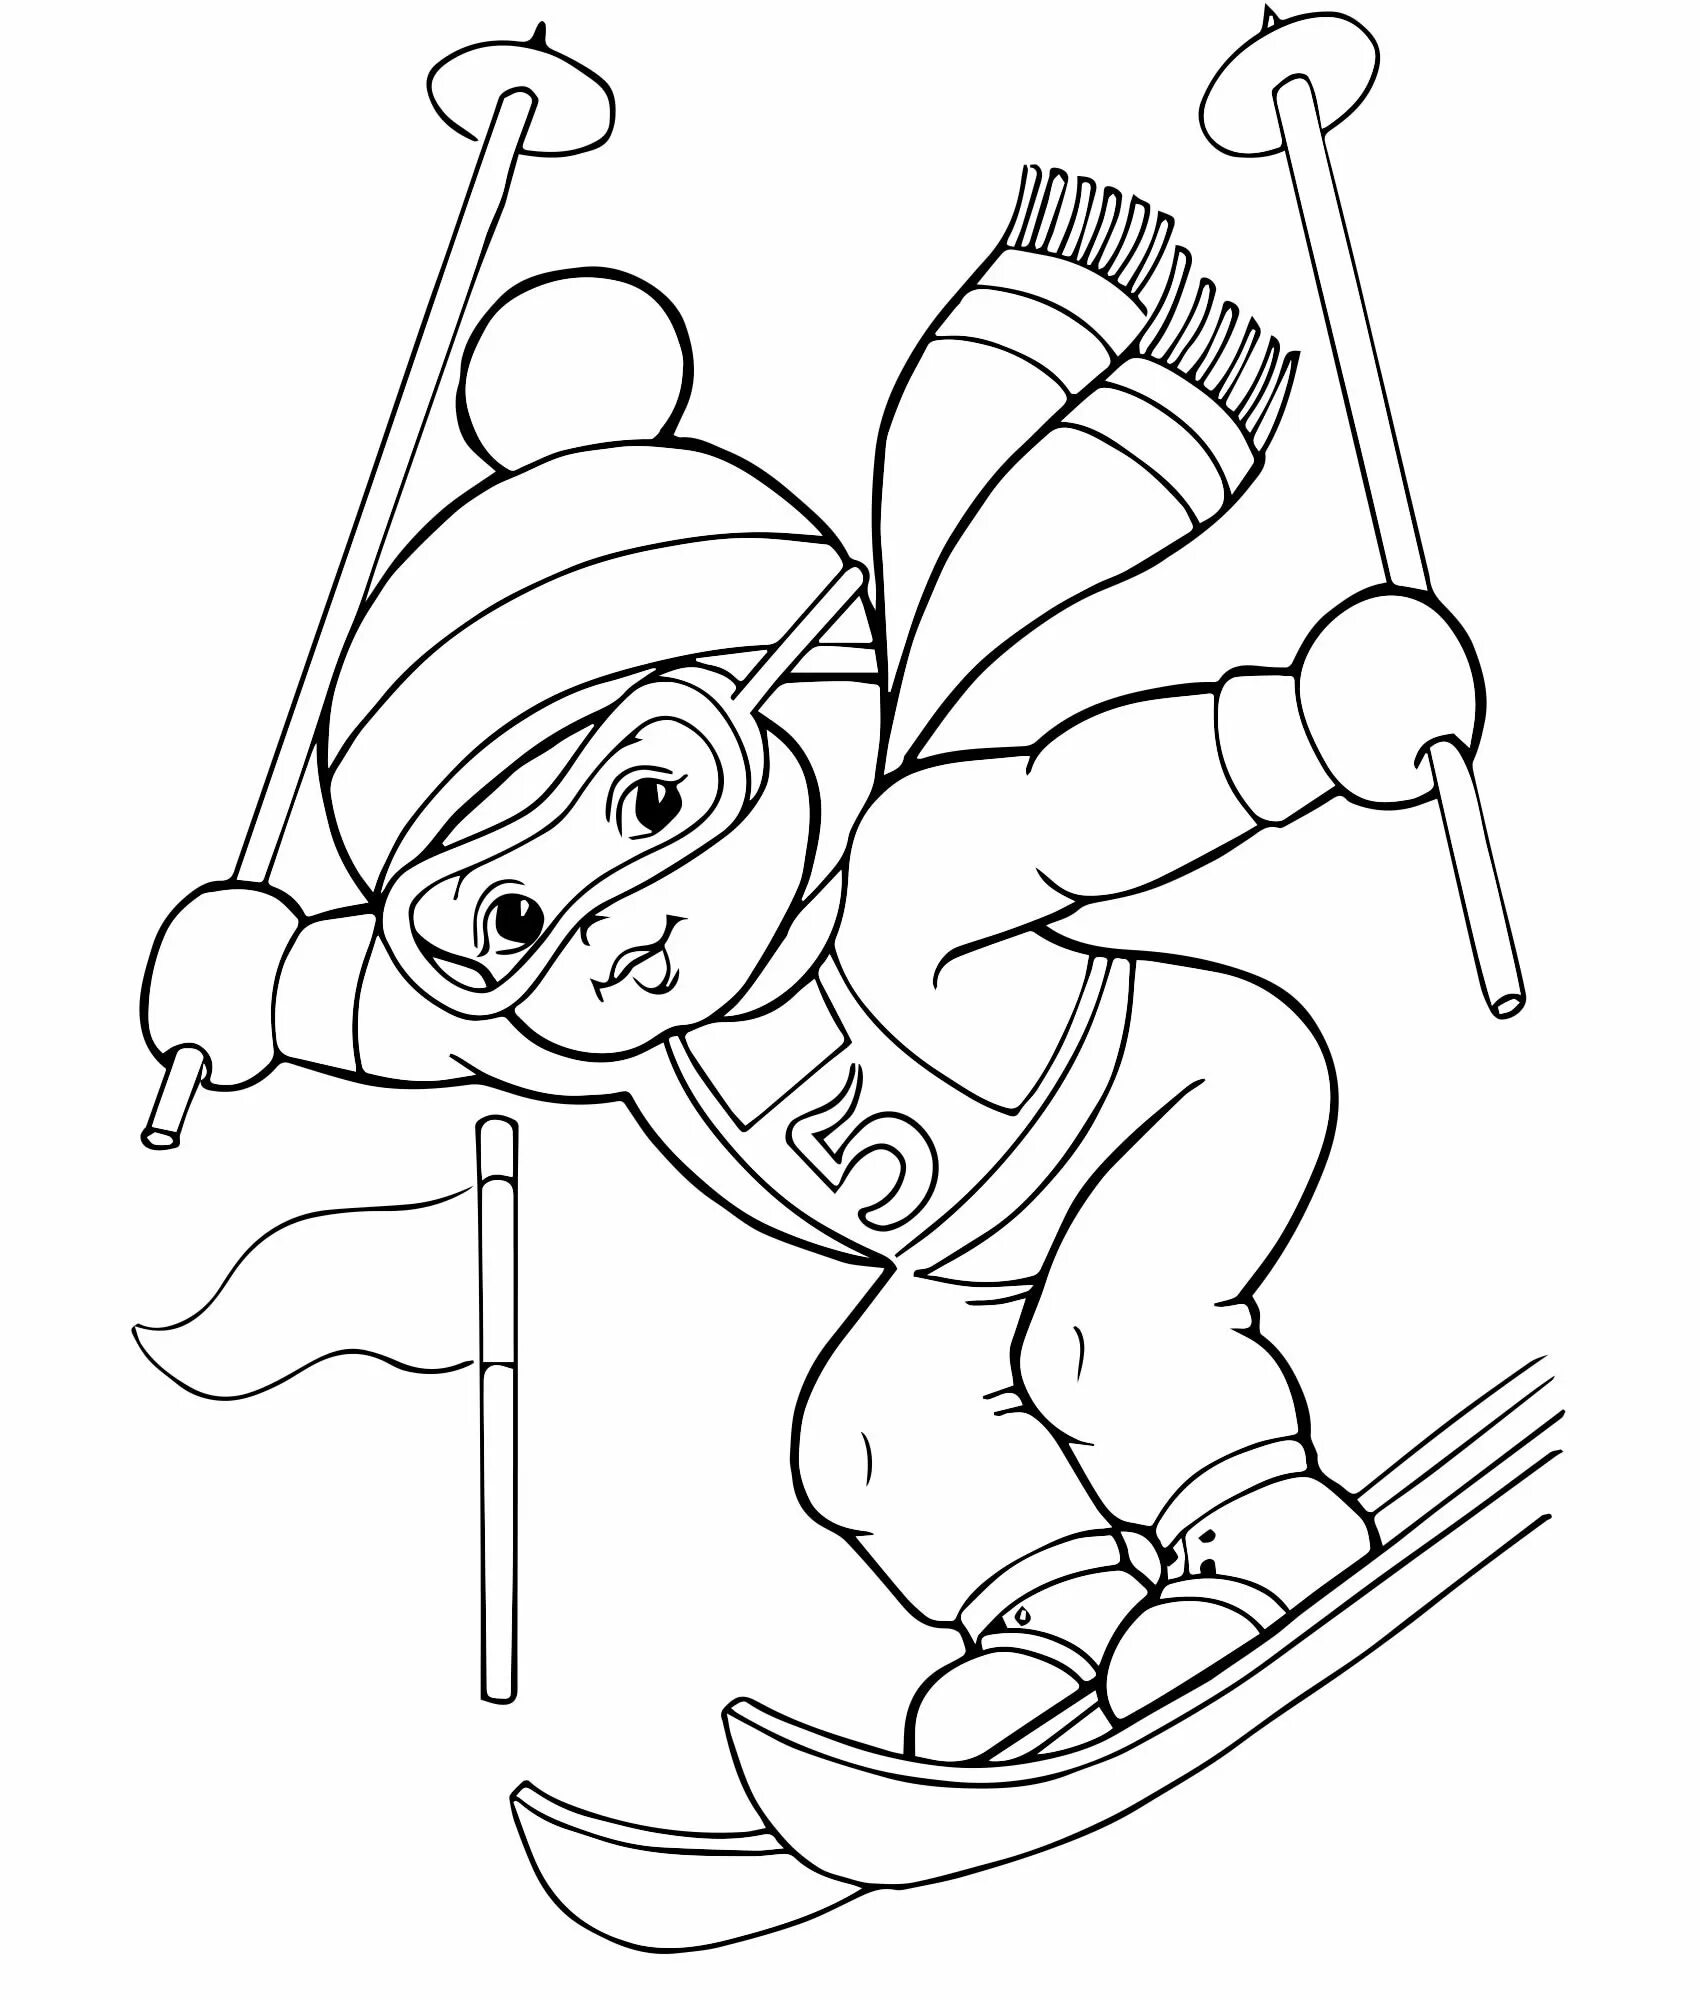 Skier for children 6 7 years old #5